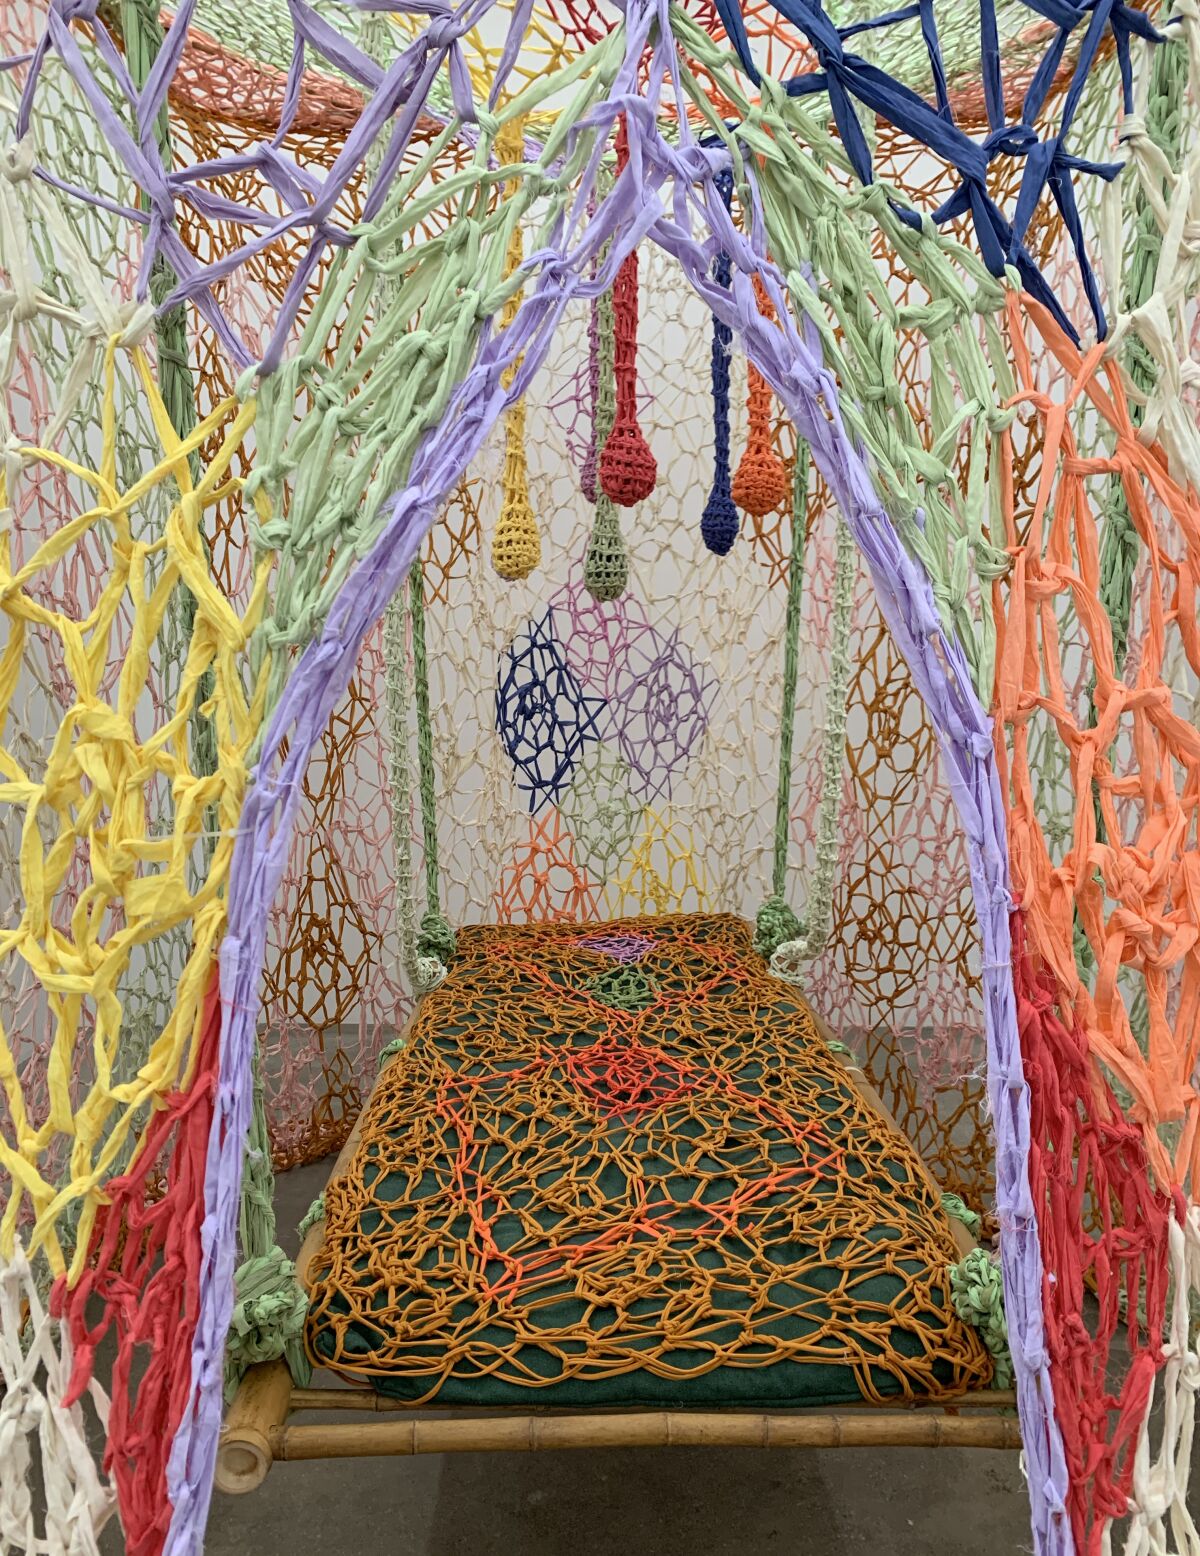 Detail of an installation by Brazilian artist Ernesto Neto at Tanya Bonakdar.